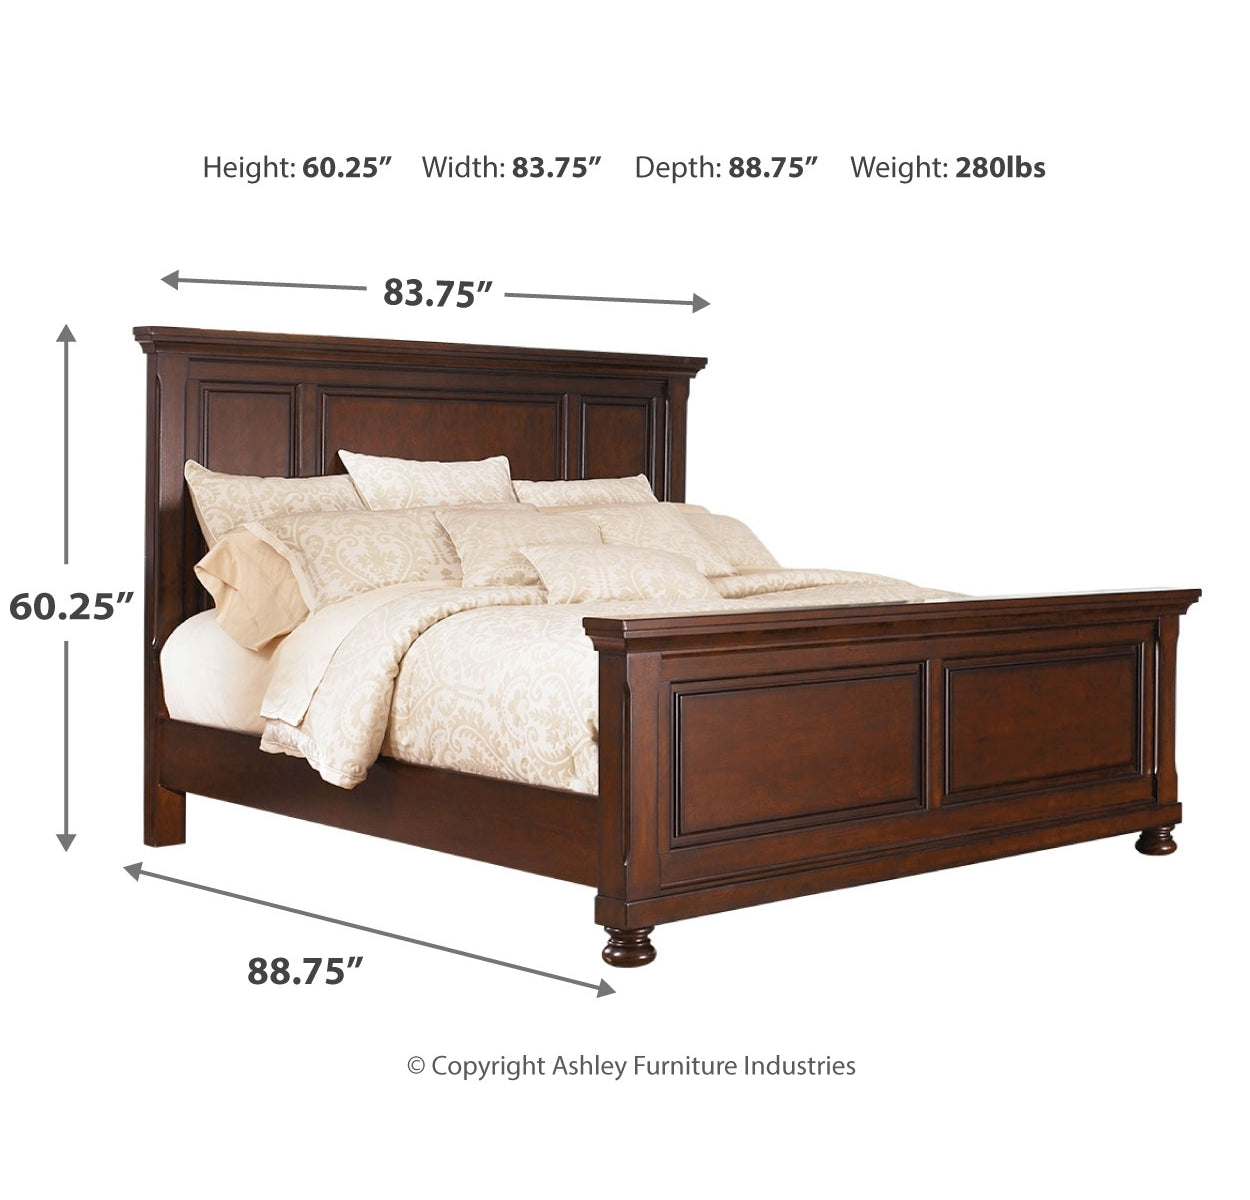 Porter King Panel Bed with Dresser